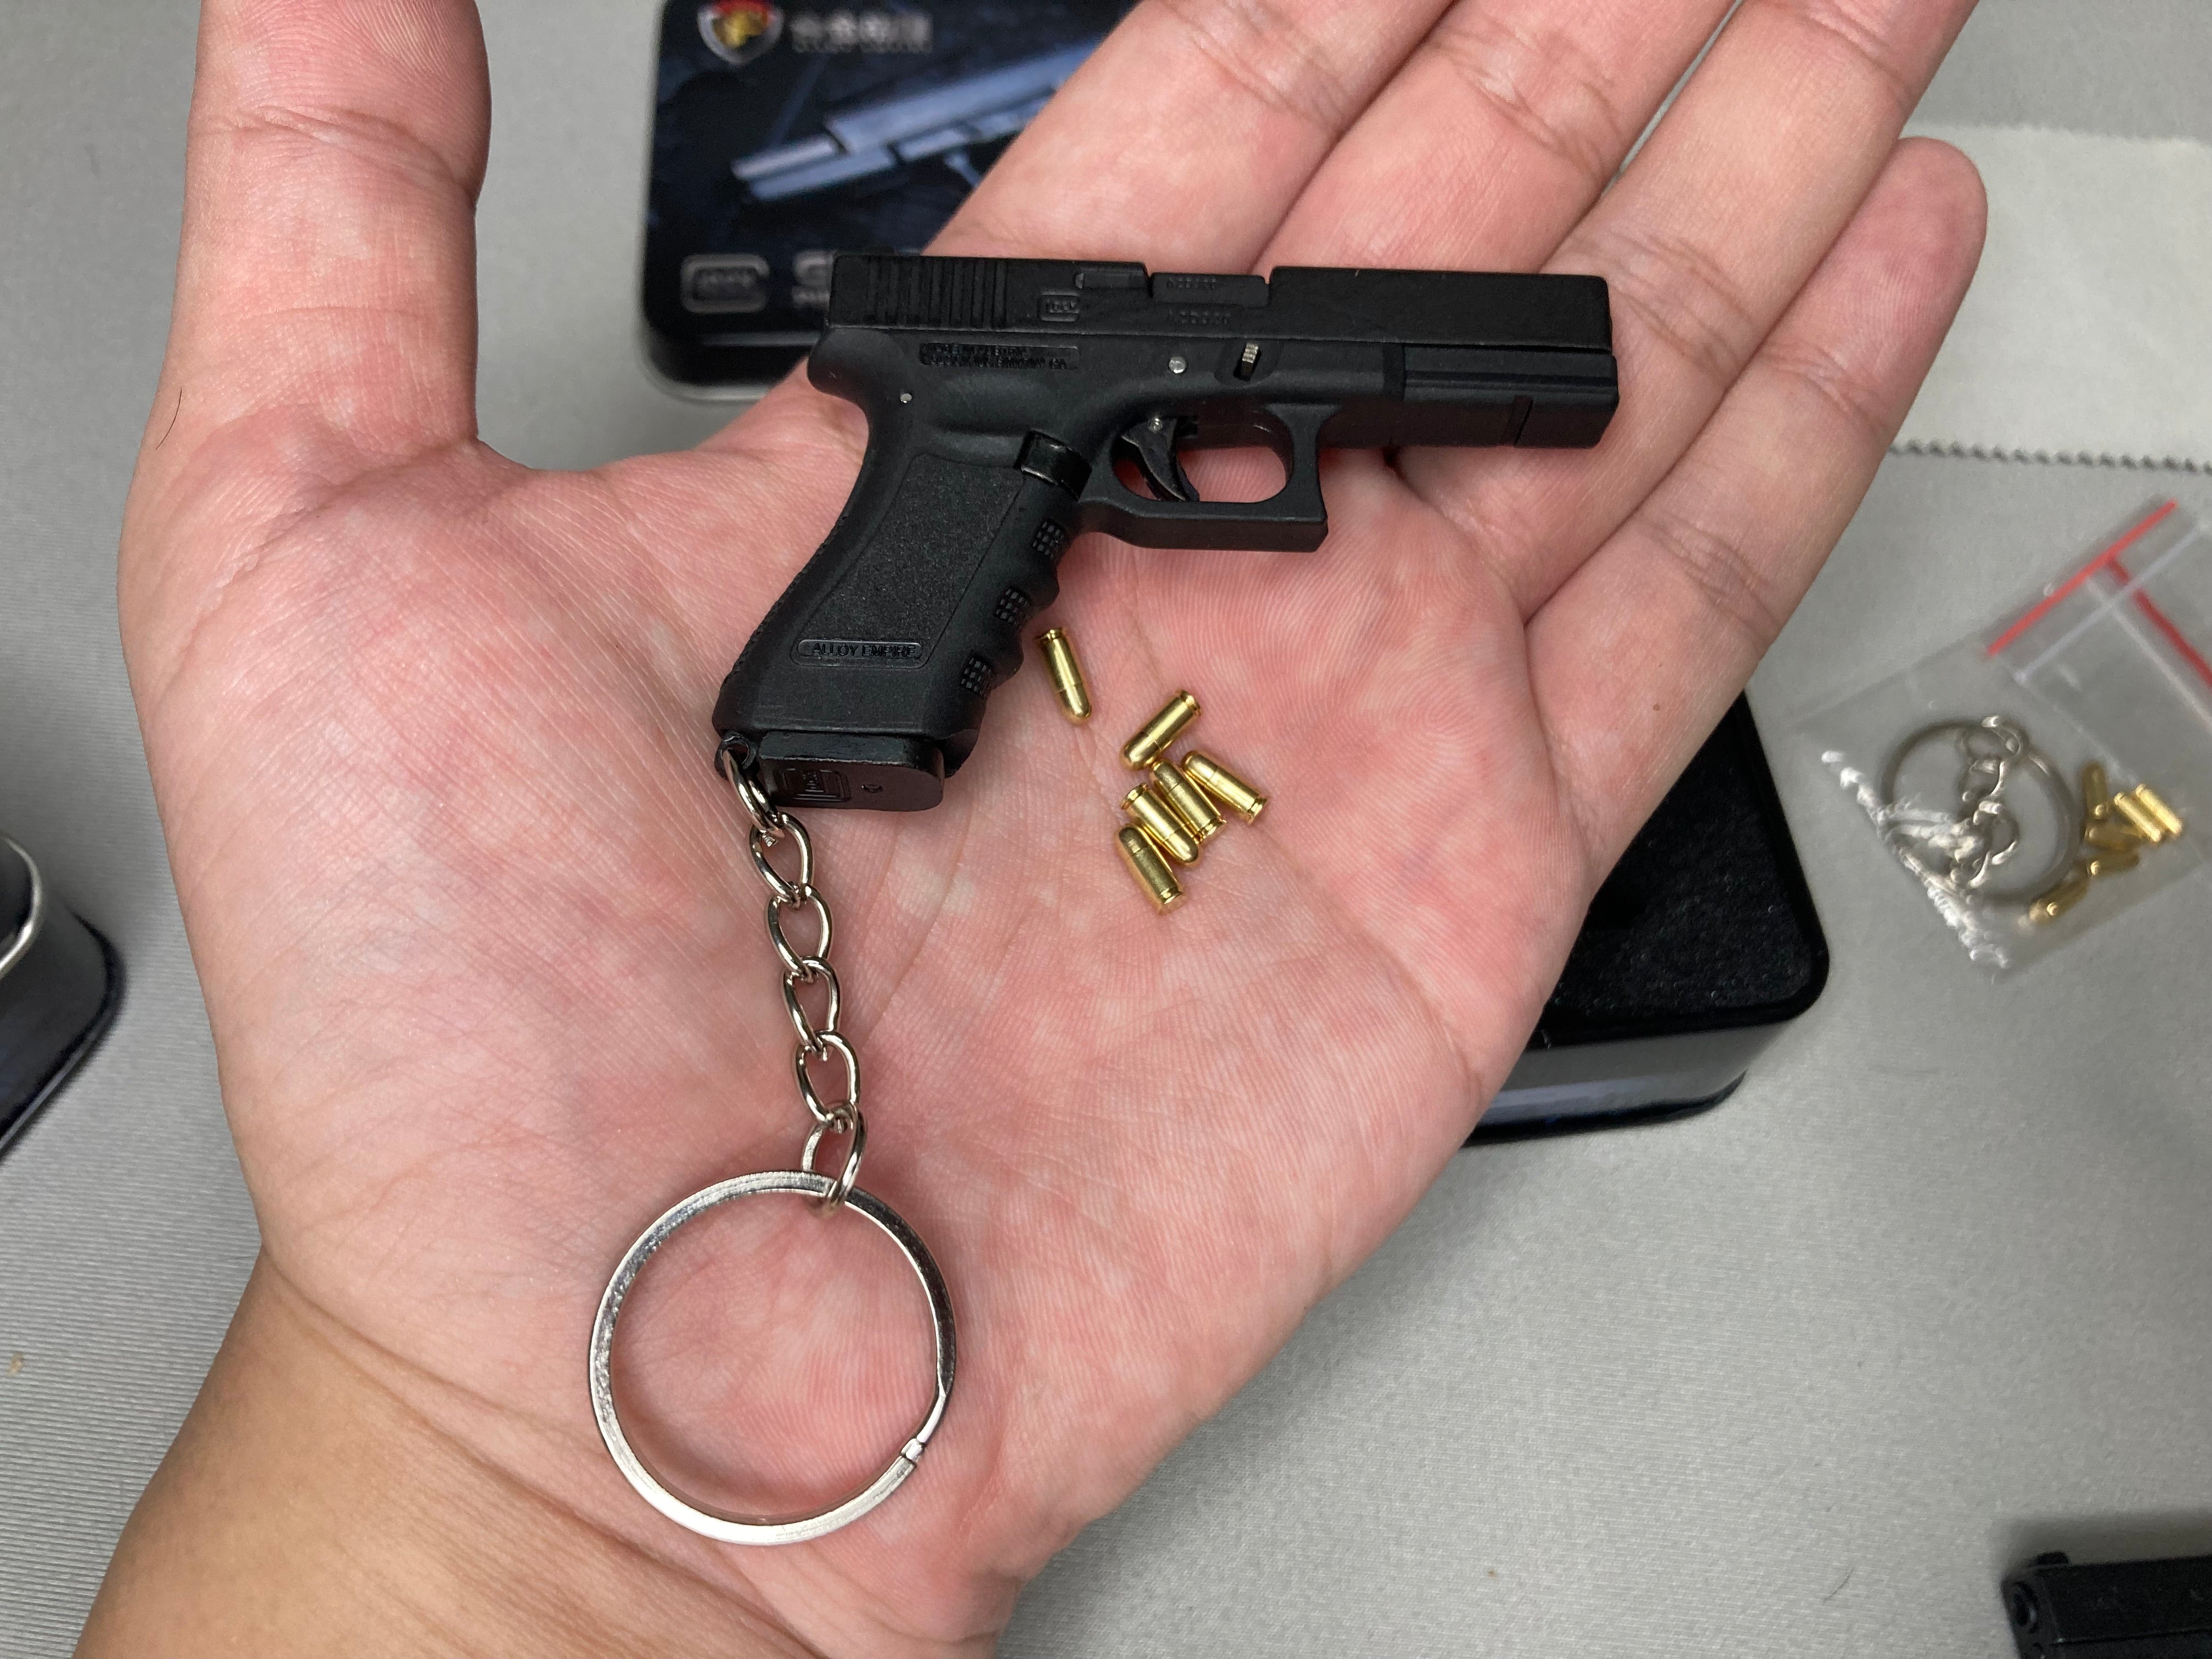 KNL Hobby Glock G17 black 1:3 scale Alloy model Keychain G17 Toy gift Fidget decompression toy